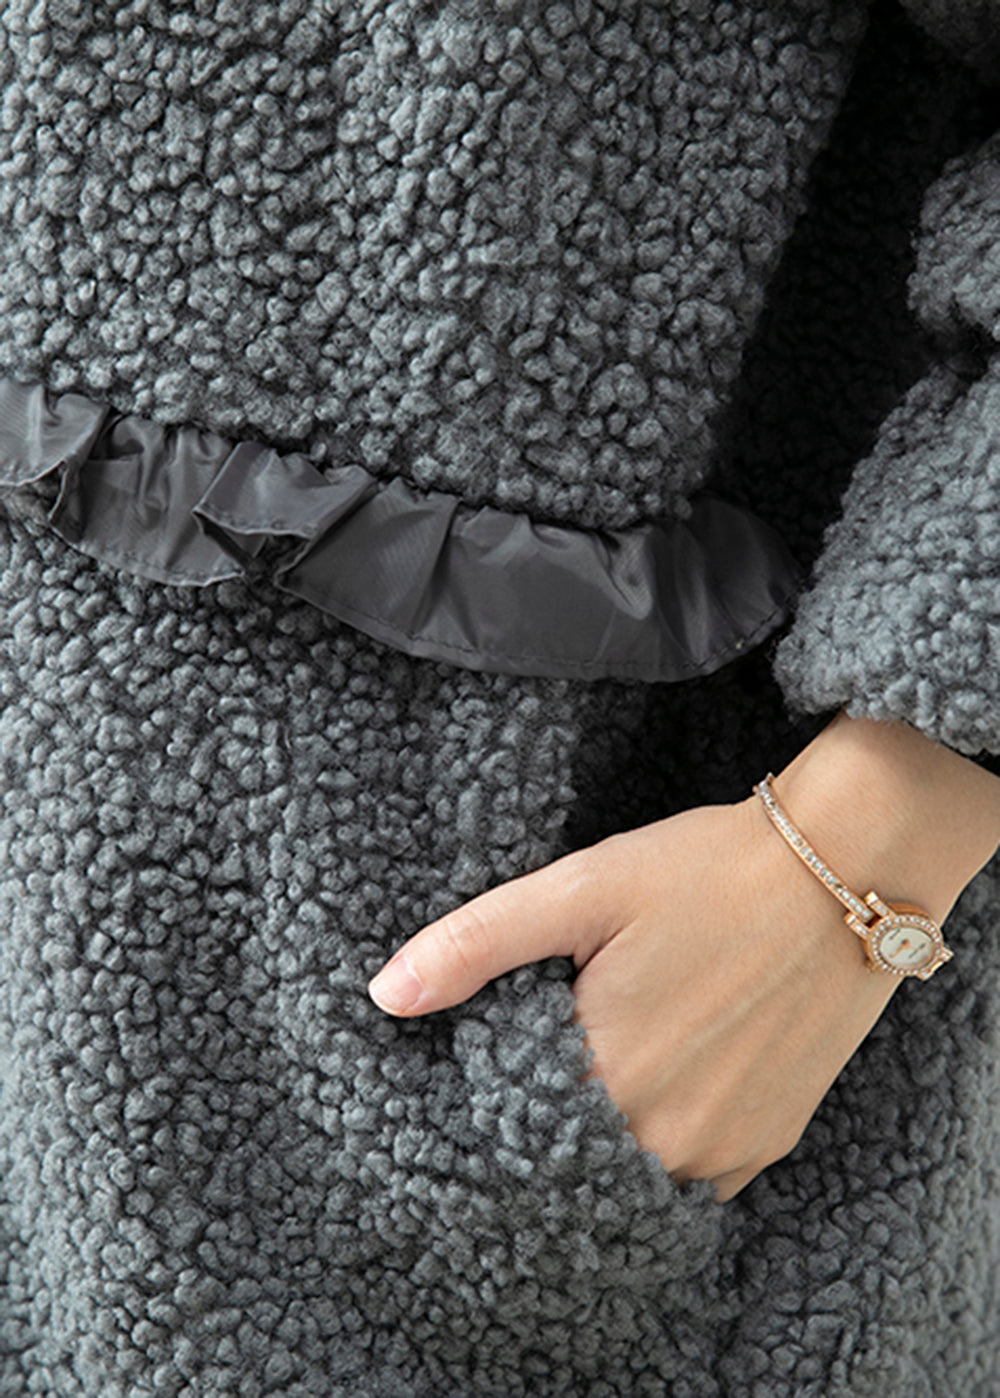 Women Grey Ruffled Patchwork Faux Fur Coat Winter